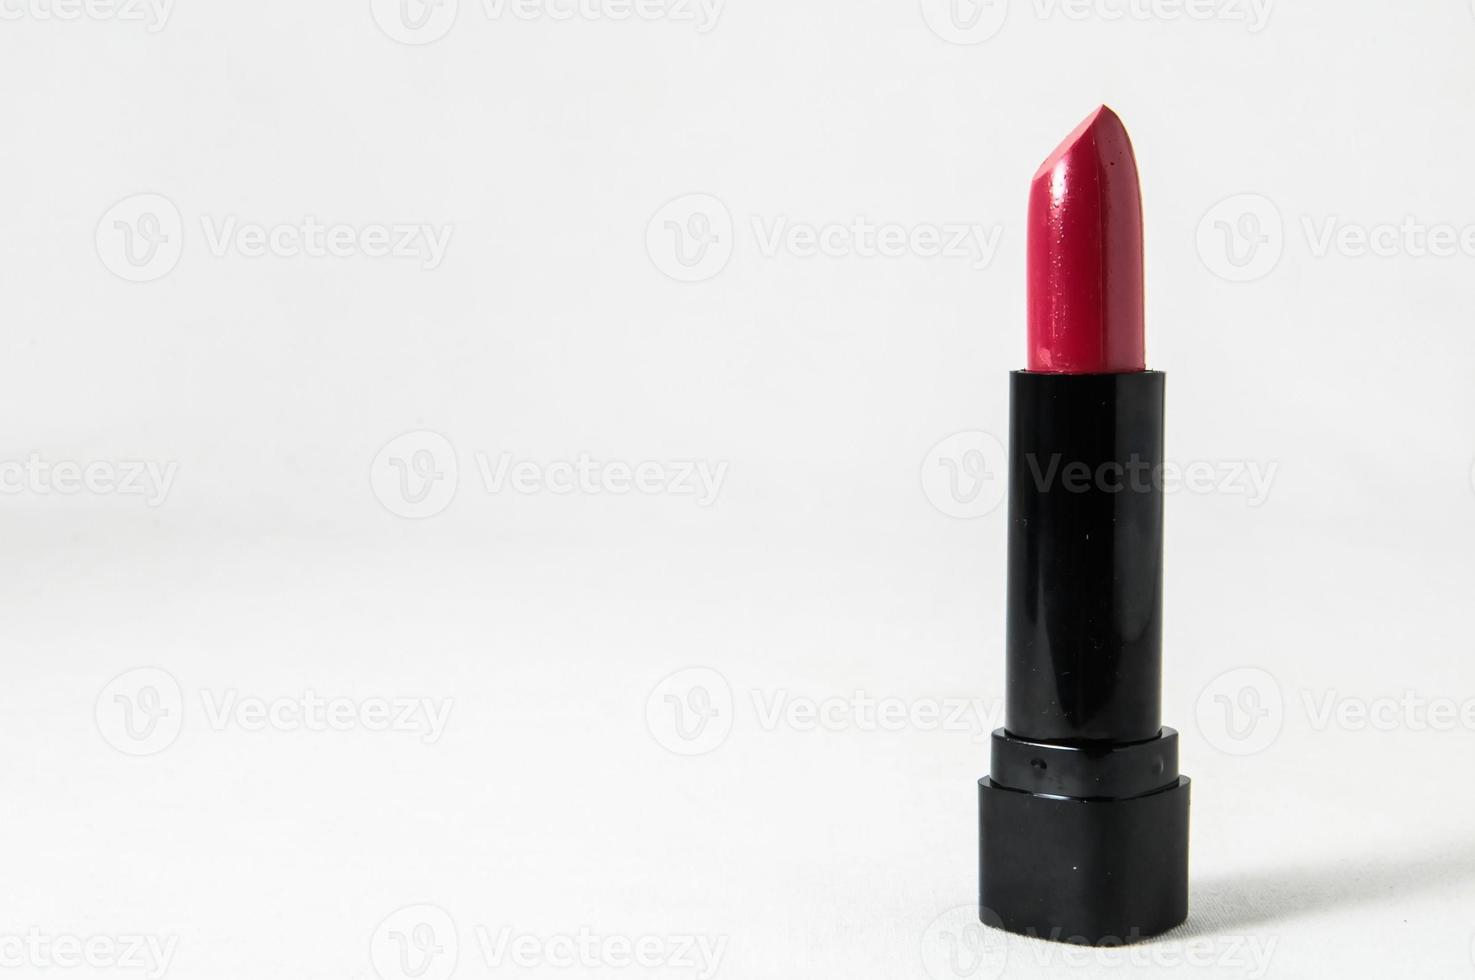 rode lippenstift op witte achtergrond foto